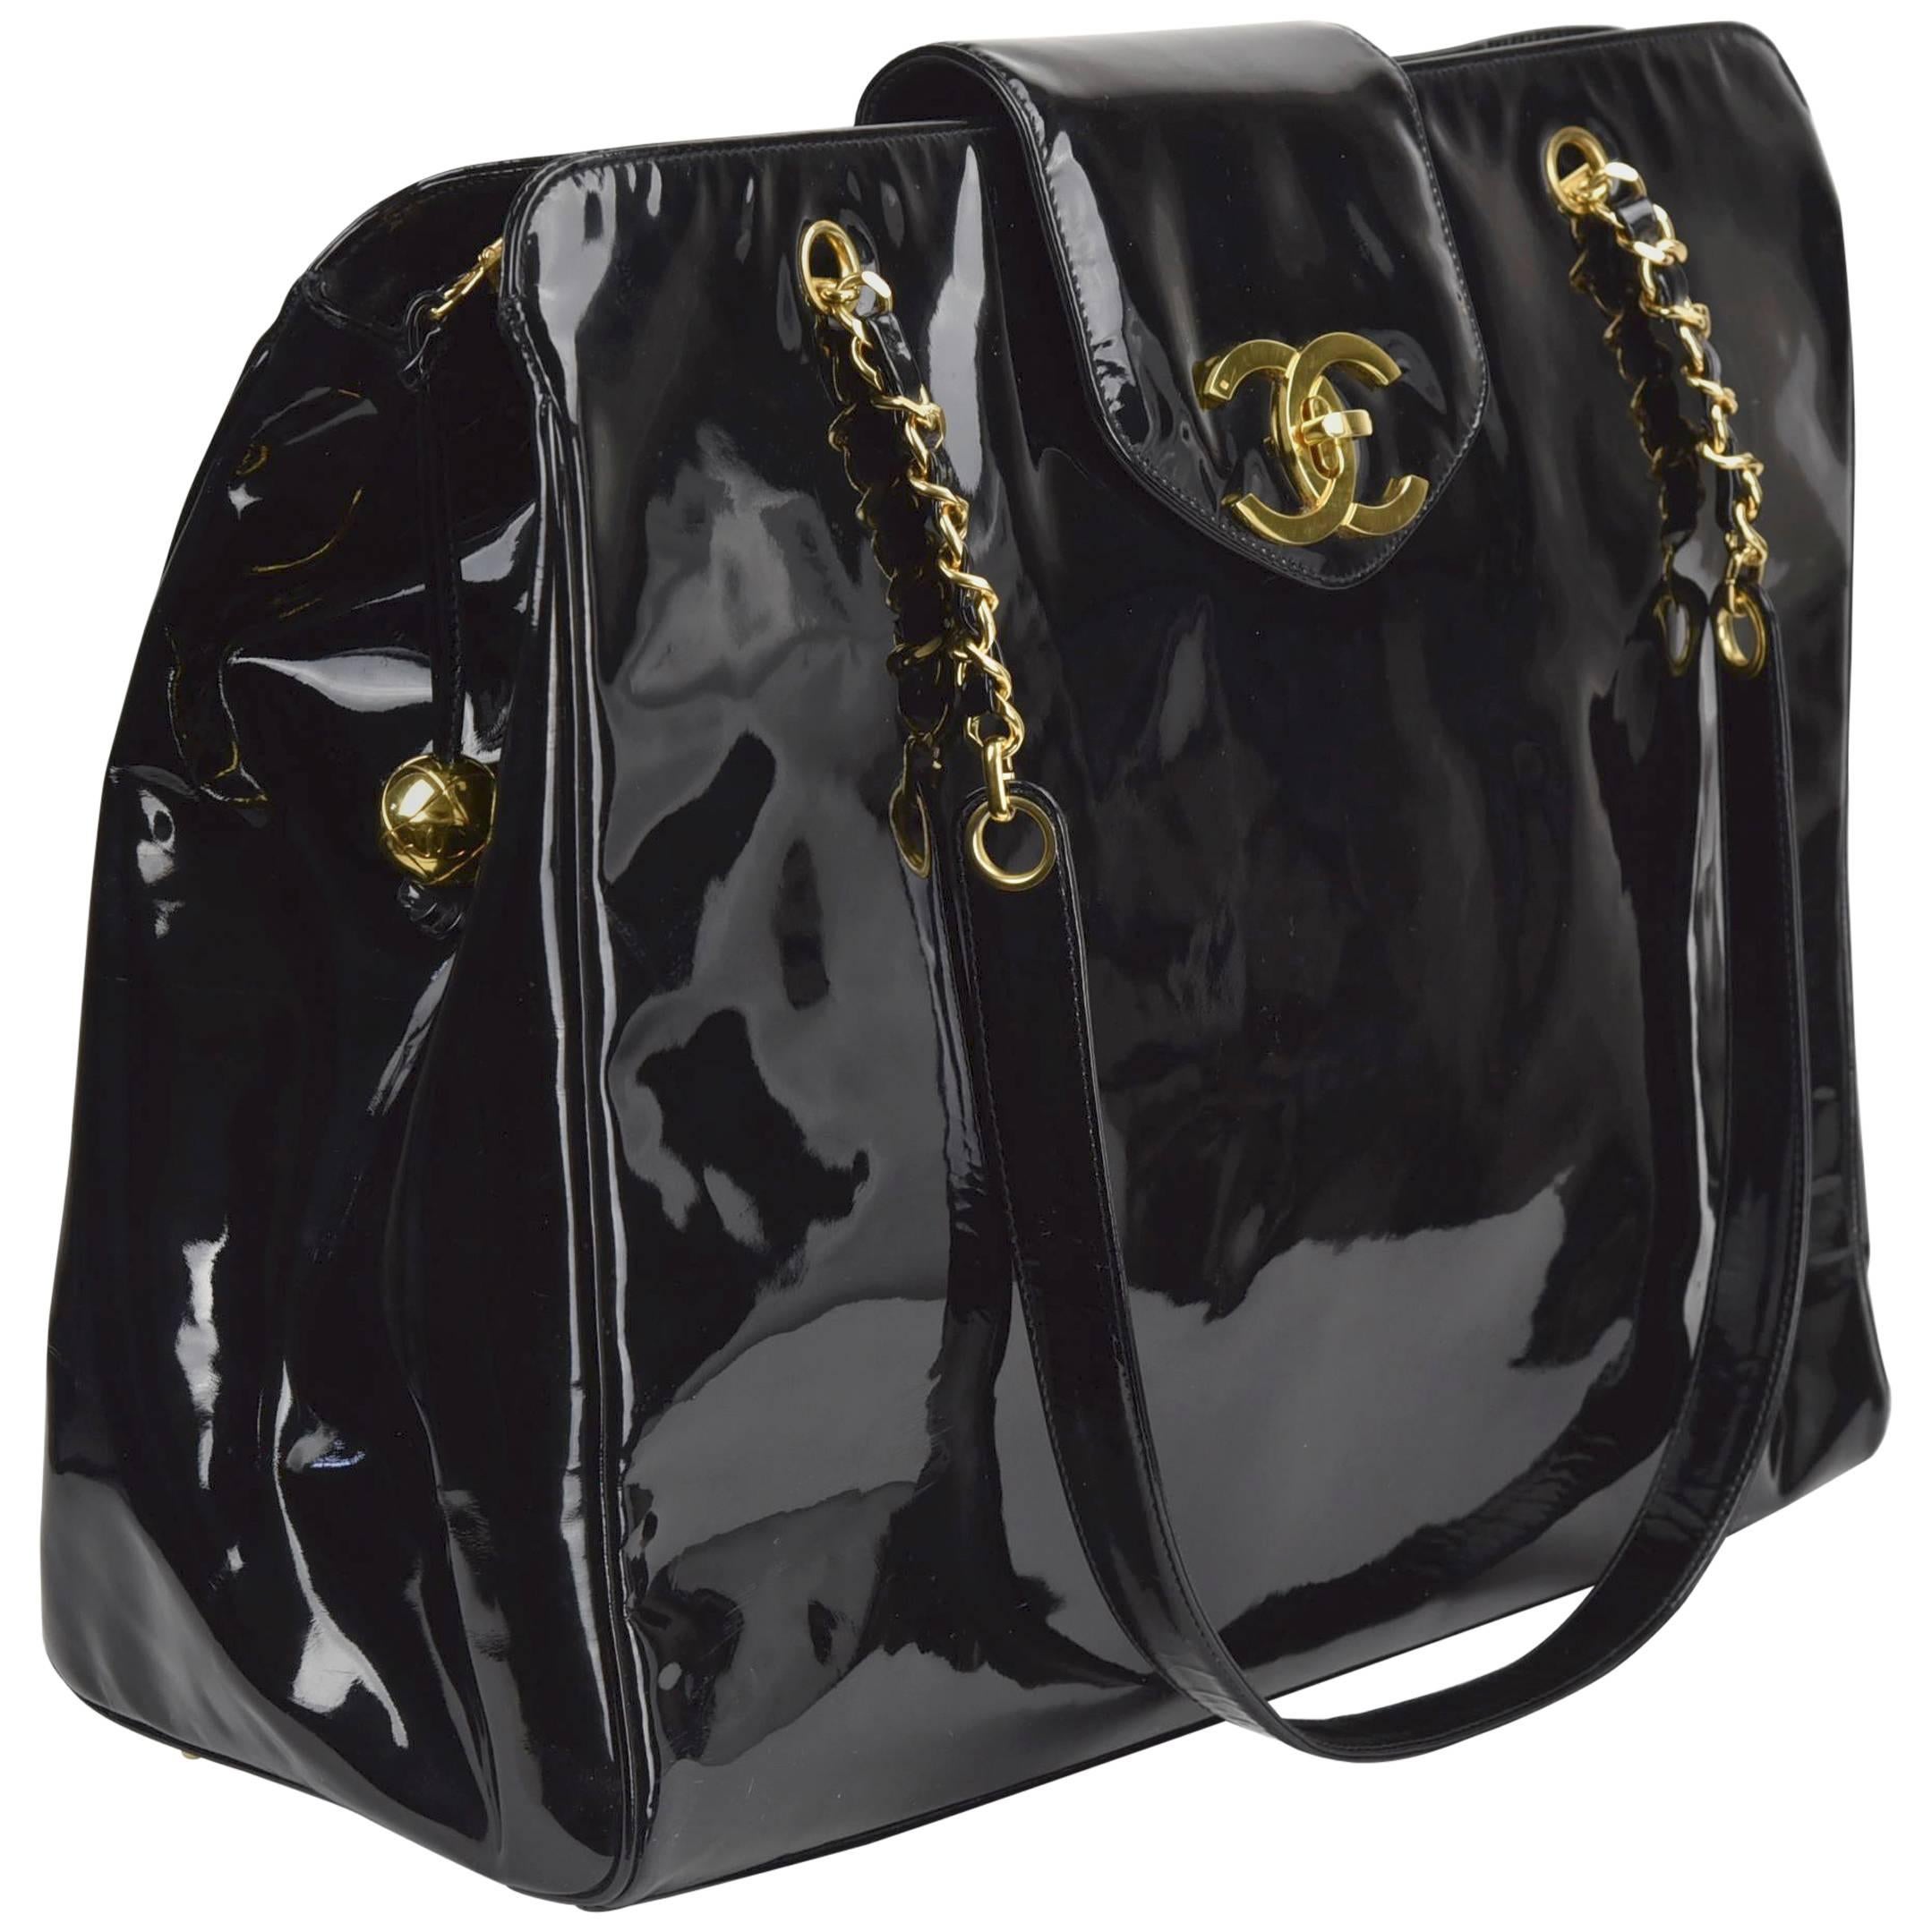 Circa 1996 Chanel Black Patent Oversized Classic Shoulder Bag For Sale